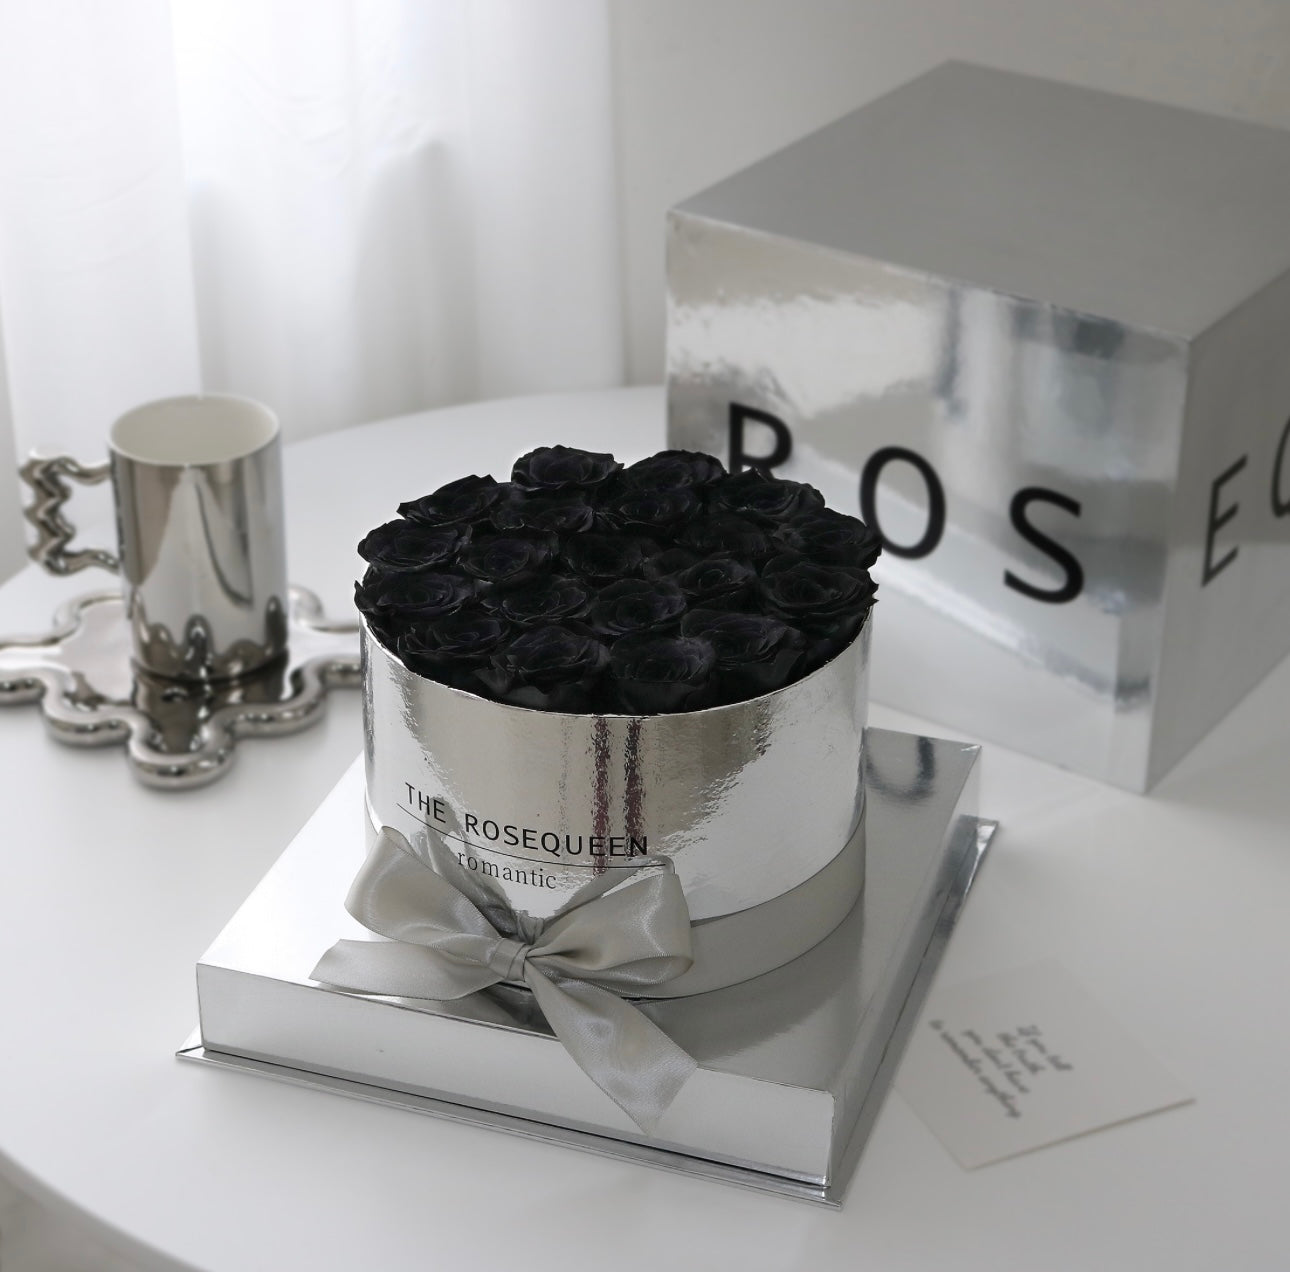 Florecise's Opulent Orb of Black Roses